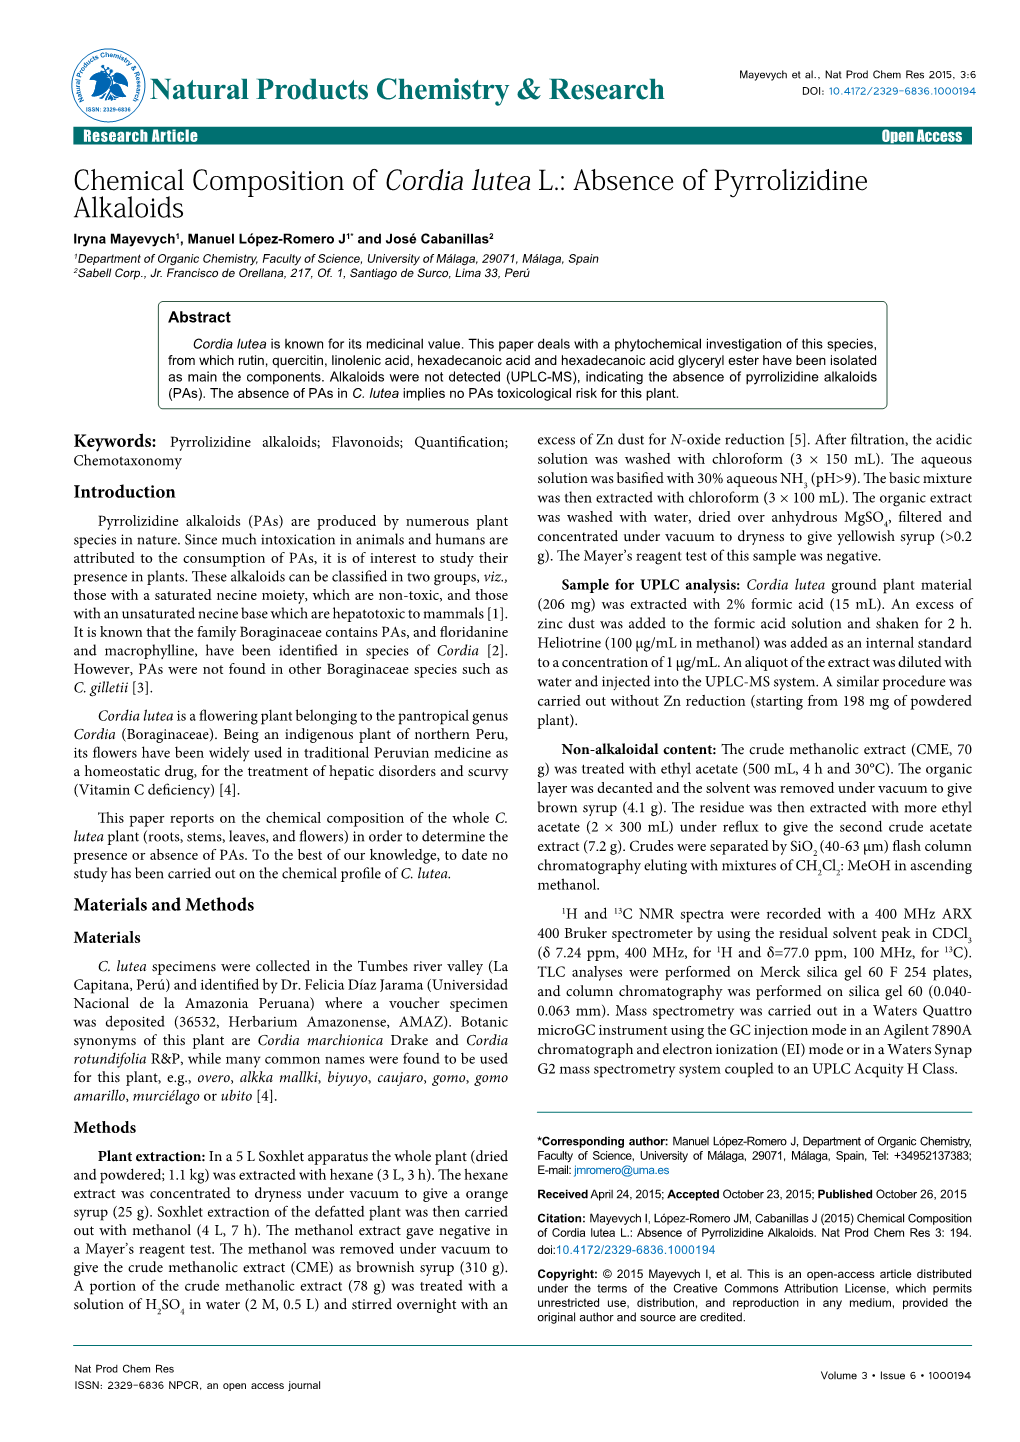 Chemical Composition of Cordia Lutea L.: Absence of Pyrrolizidine Alkaloids